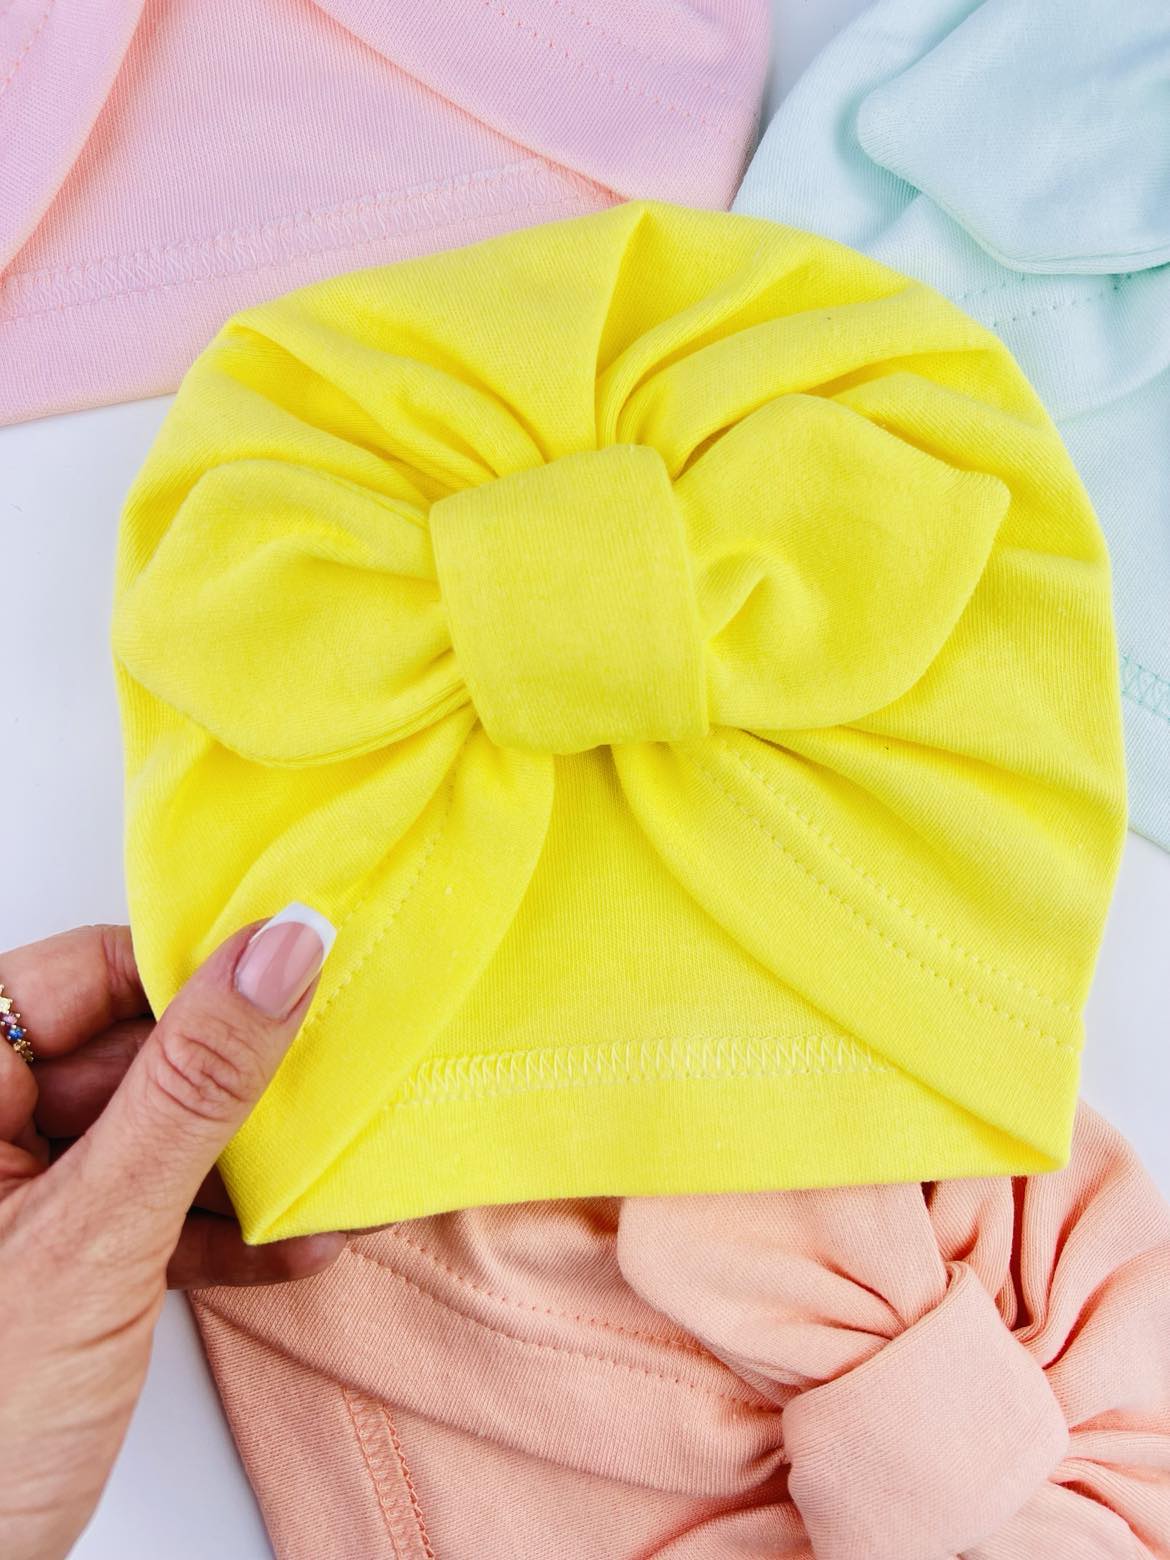 KAYRA baby Detská turbánová čiapka- Klasik, žltá 0-9m.